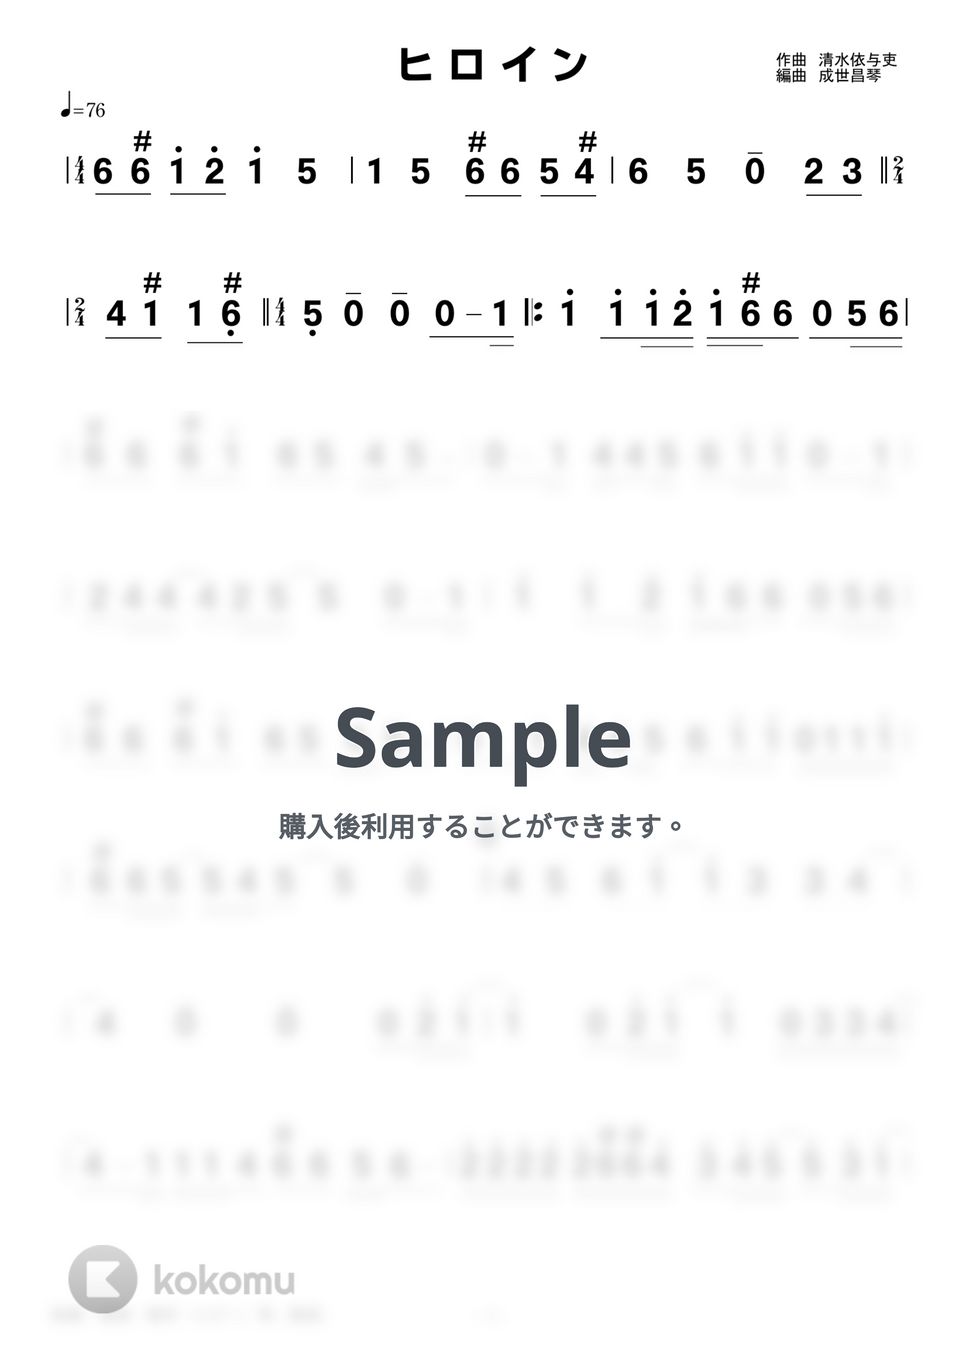 back number - ヒロイン (大正琴/back number/ドーンミュージック/ソロ) by 成世昌琴